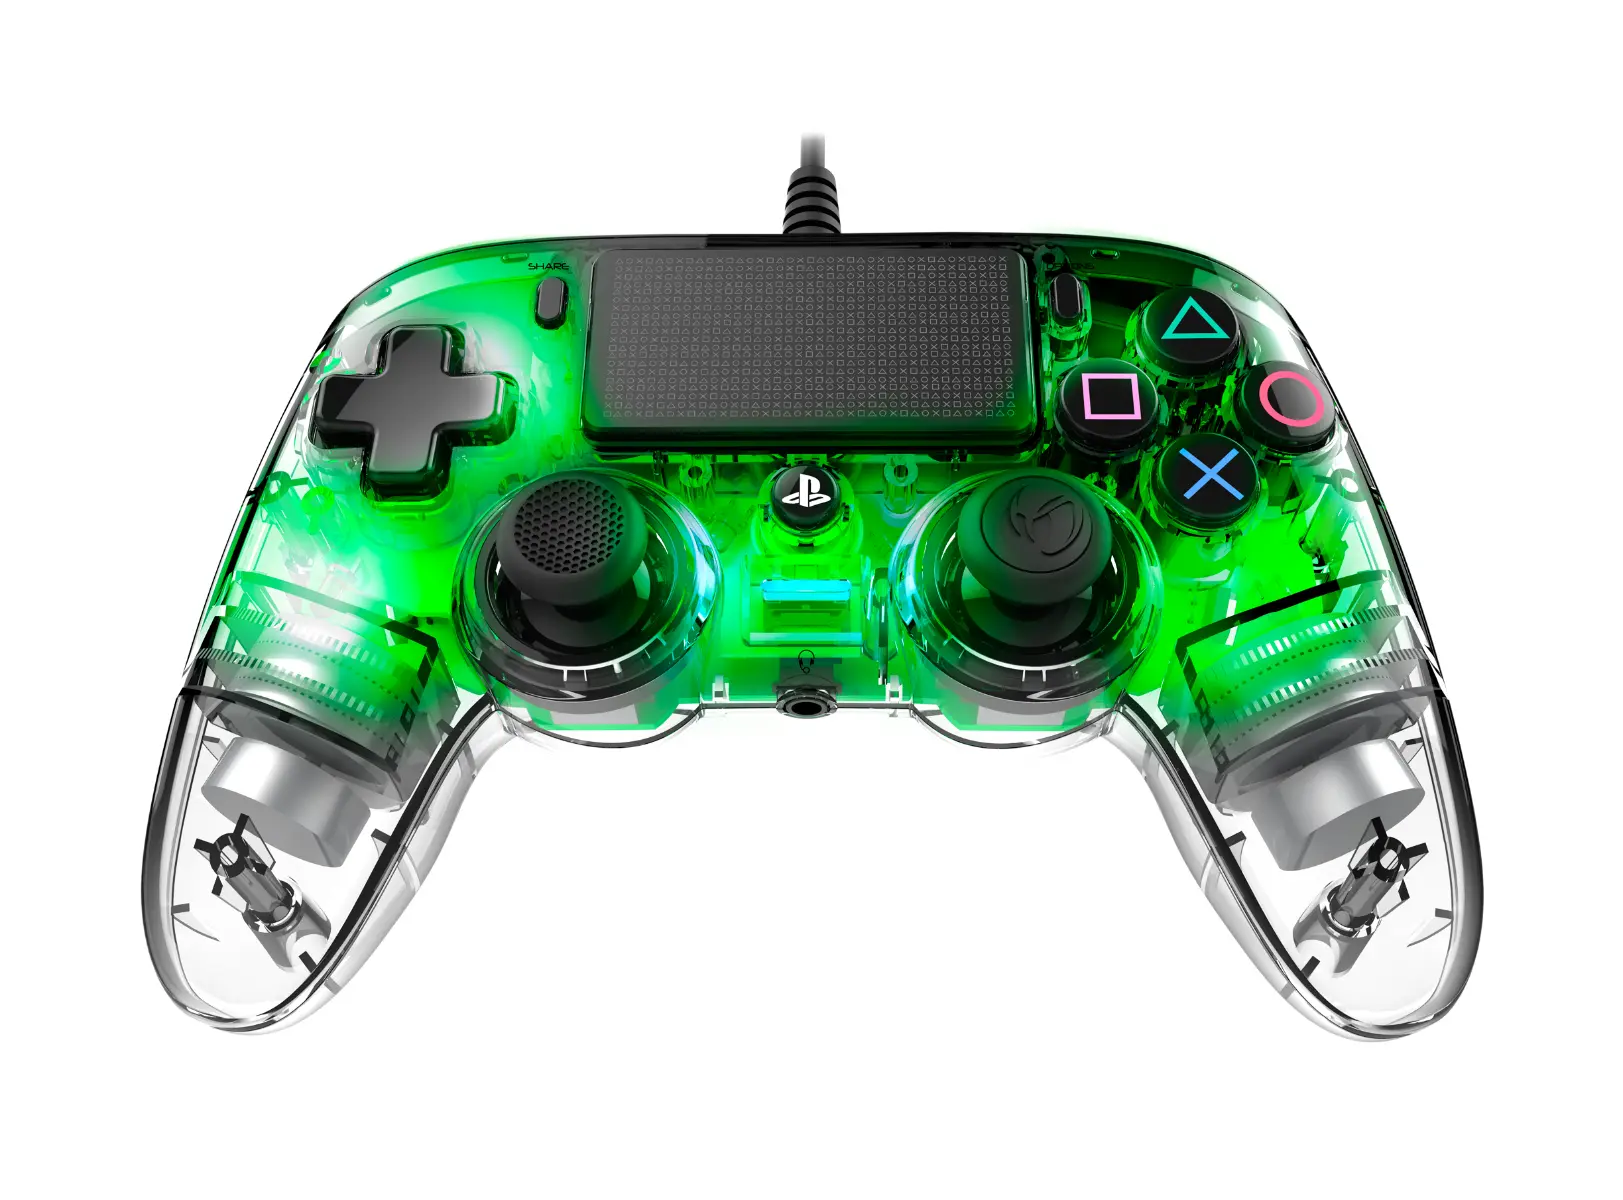 Controller Nacon pentru Playstation 4, Verde